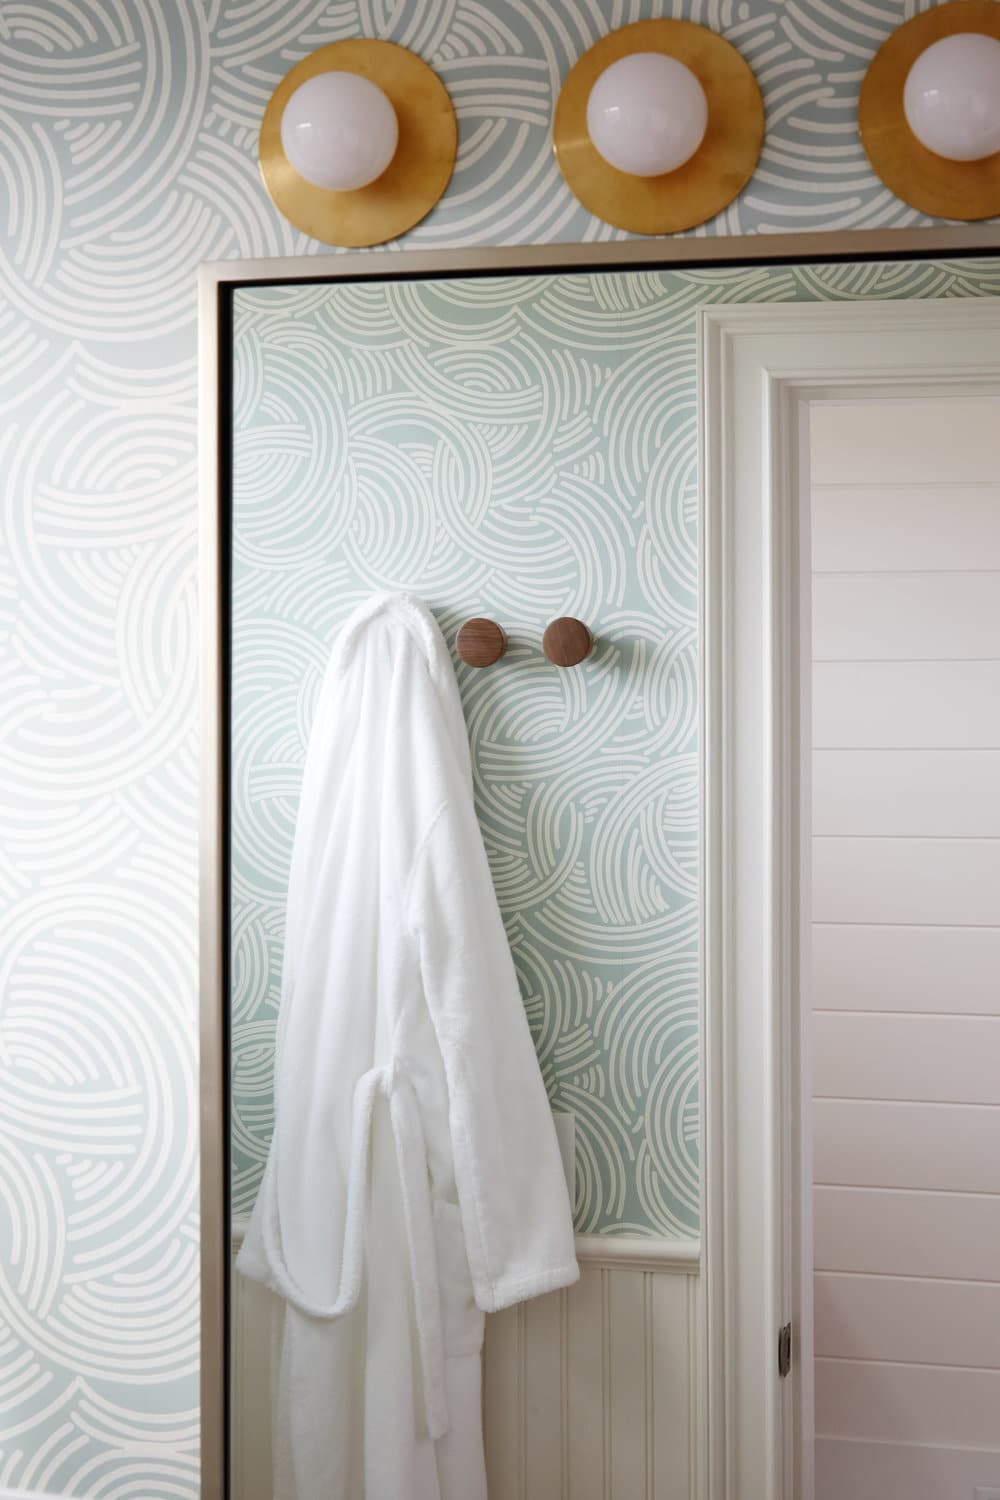 fun wallpaper in the bath | modern shaker beach house tour on coco kelley